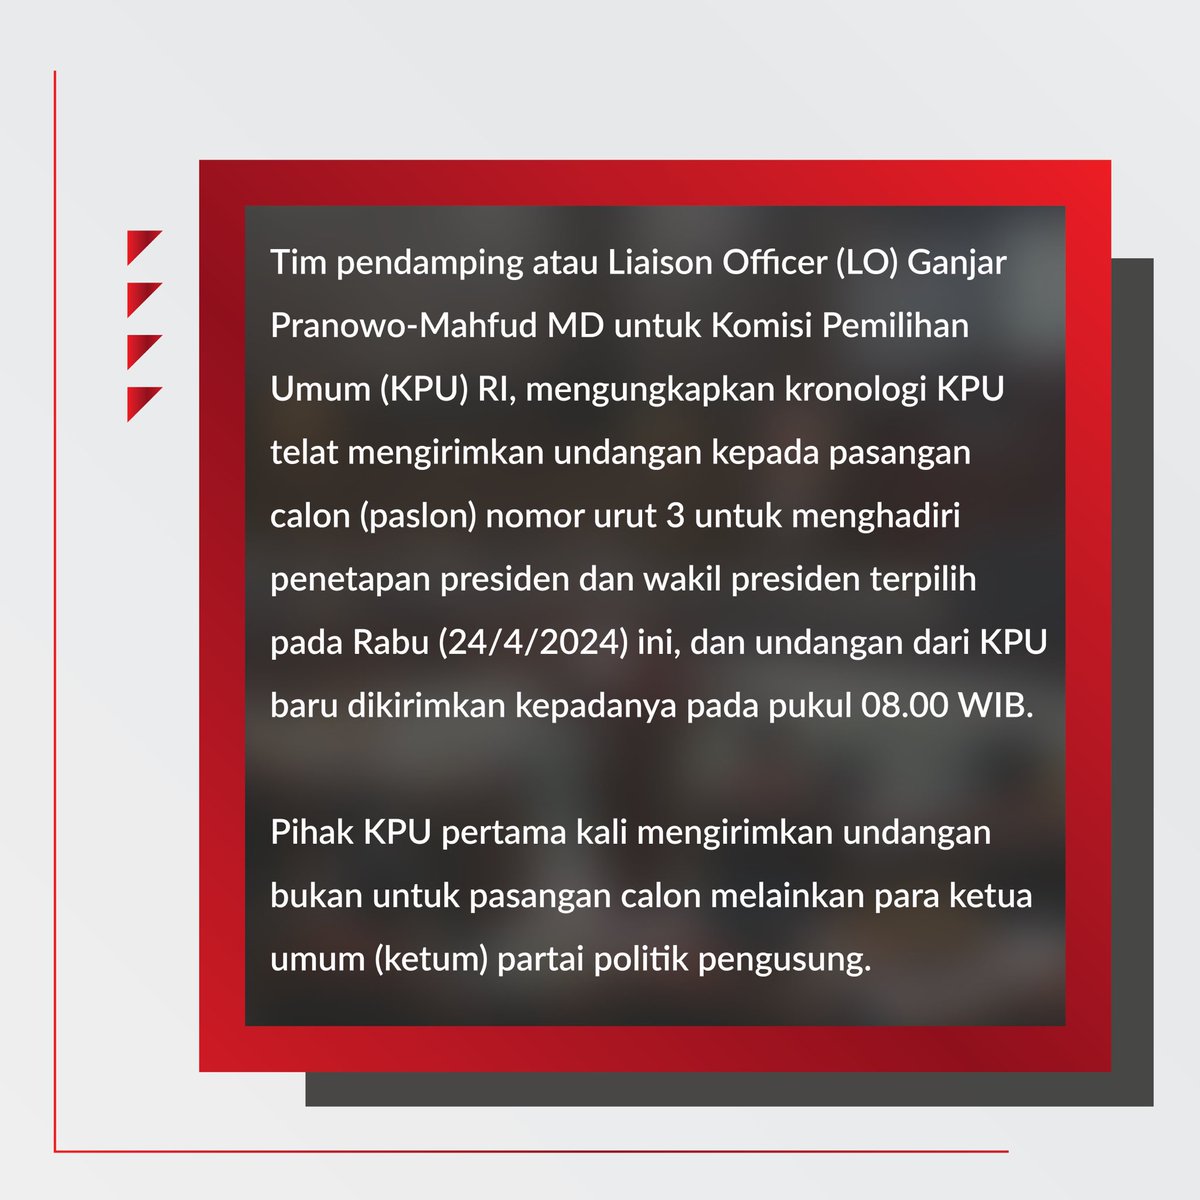 Hasil keputusan MK telah diumumkan dengan pasangan Prabowo Subianto dan Gibran Rakabuming sebagai Presiden dan Wakil Presiden RI. Meski begitu tidak semua undangan diterima oleh paslon lainnya, seperti yang dialami Ganjar Pranowo.

#ganjarmahfud #ganjar_pranowo